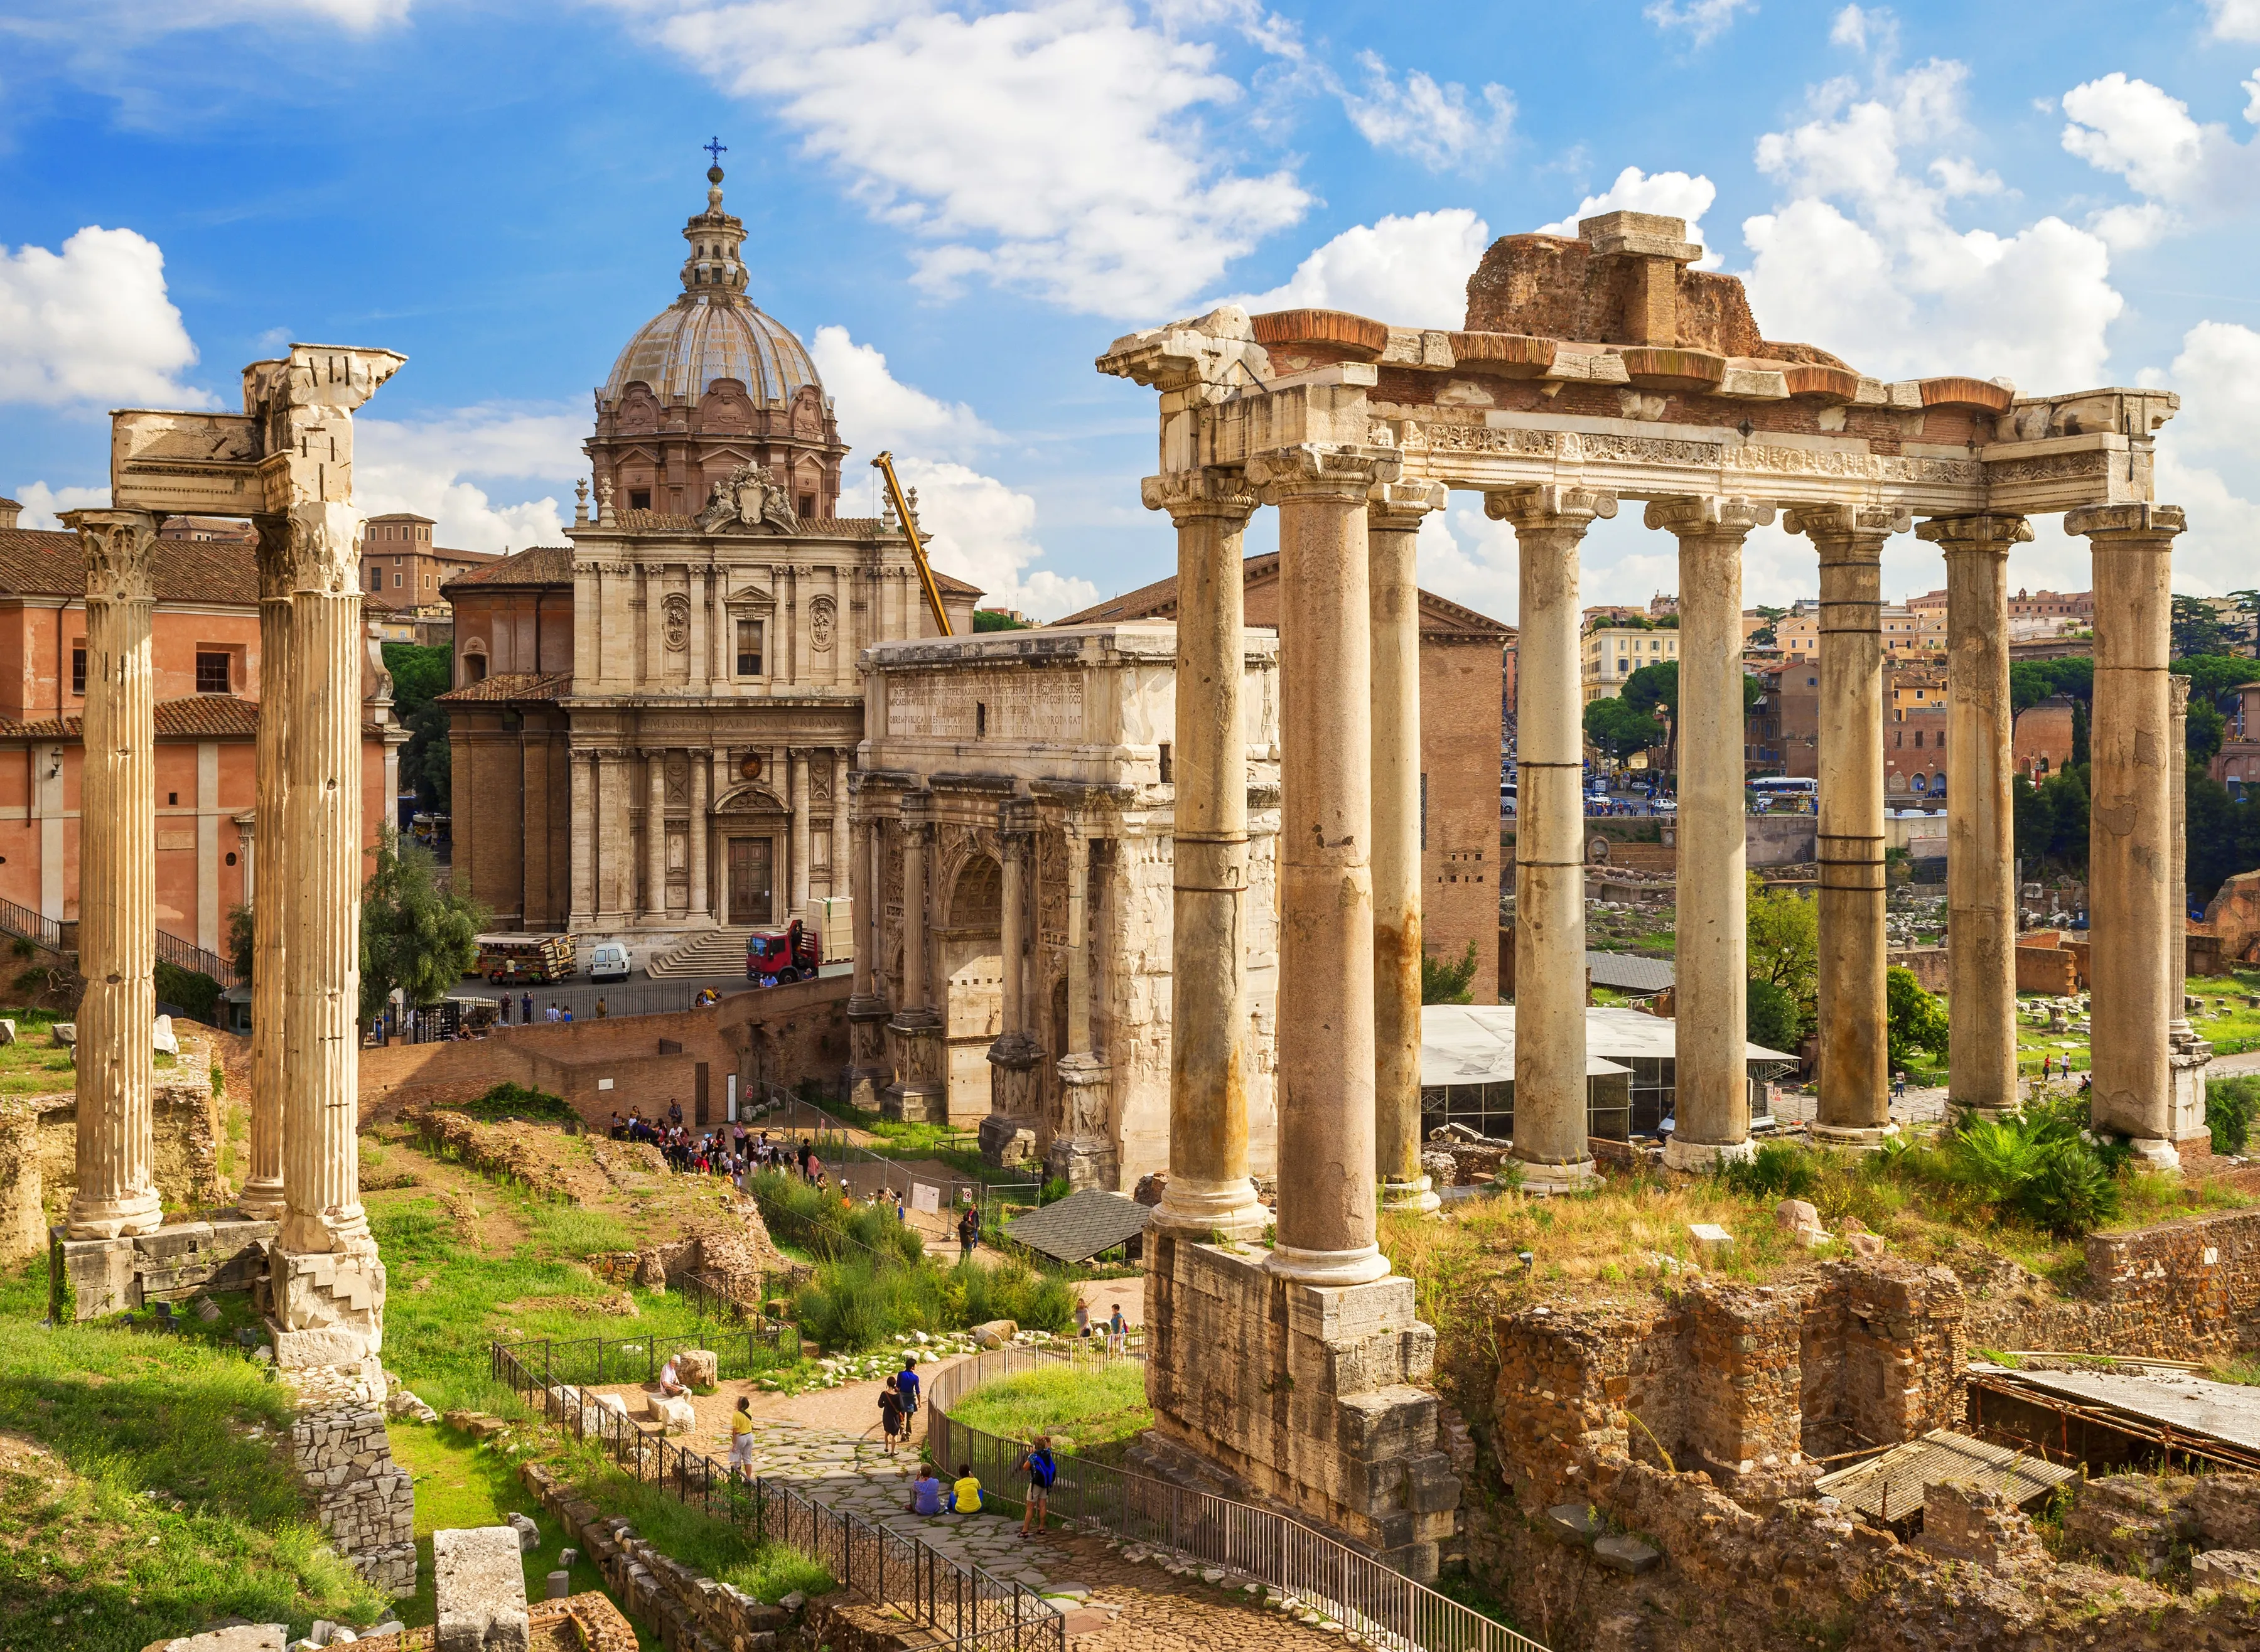 PAPERMOON Fototapete "Roman Forum Rome" Tapeten Gr. B/L: 2 m x 1,49 m, Bahnen: 4 St., bunt (mehrfarbig) Fototapeten